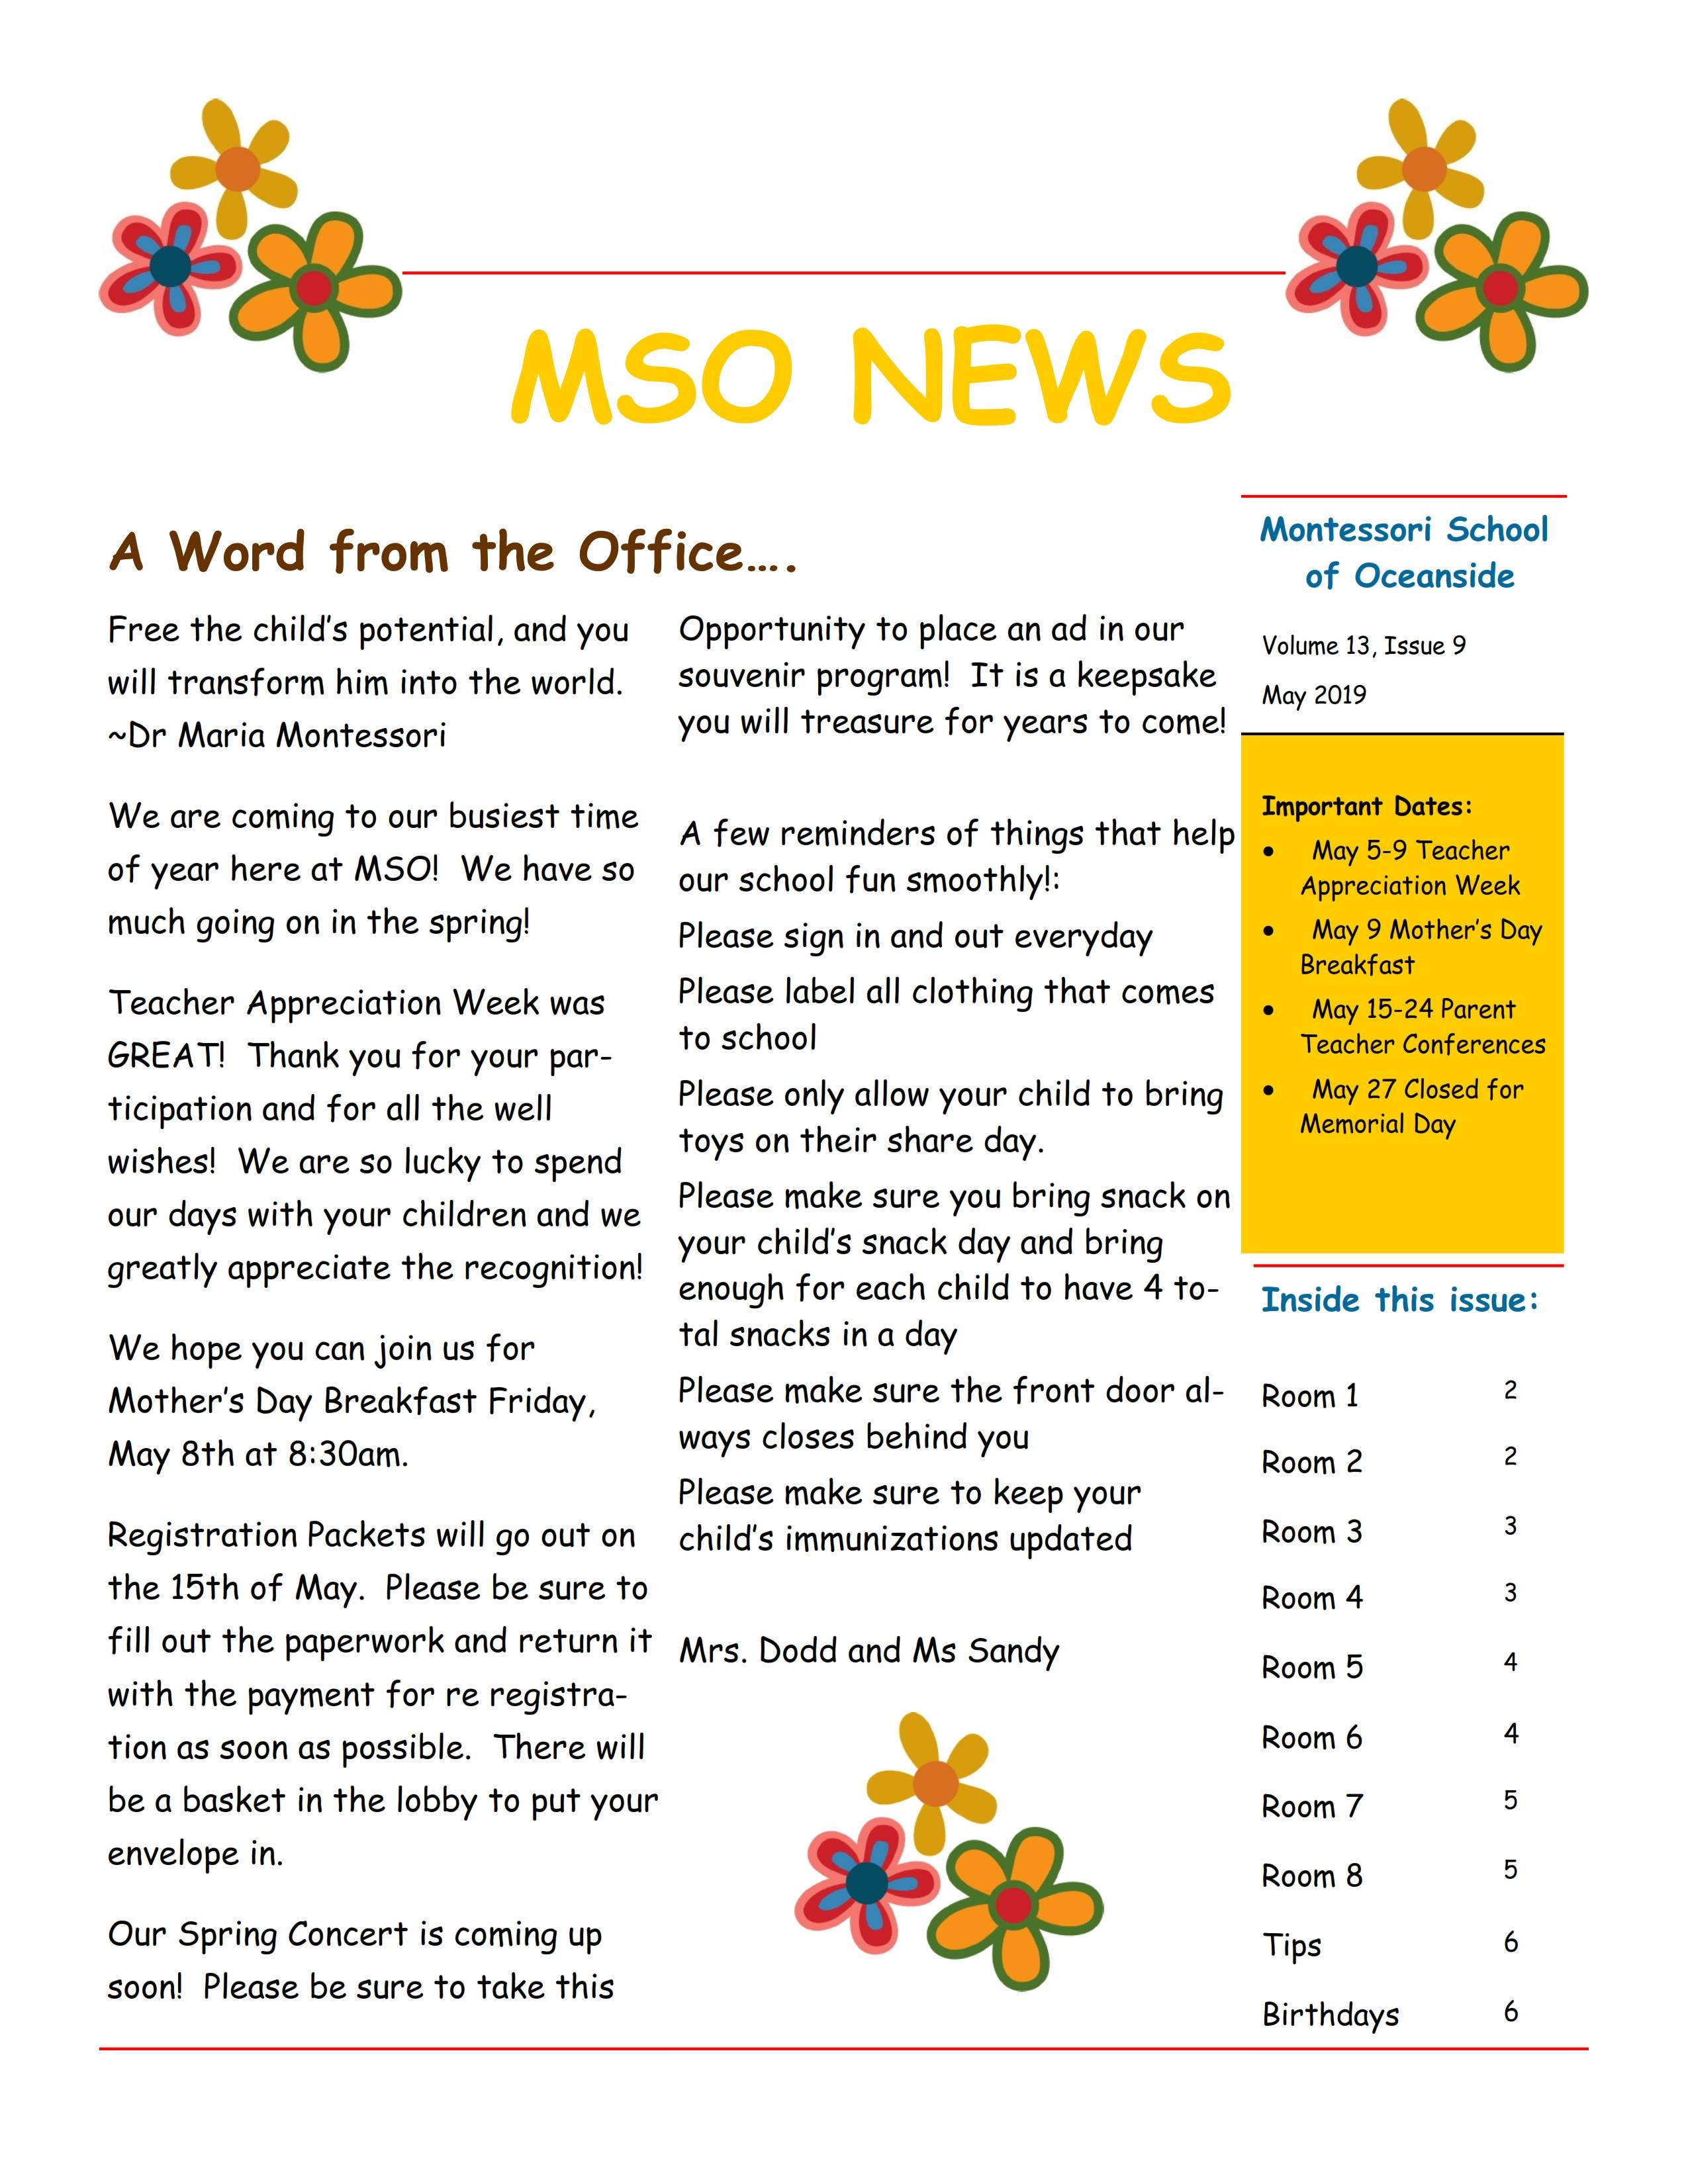 mso-may-2019-newsletter-montessori-school-of-oceanside